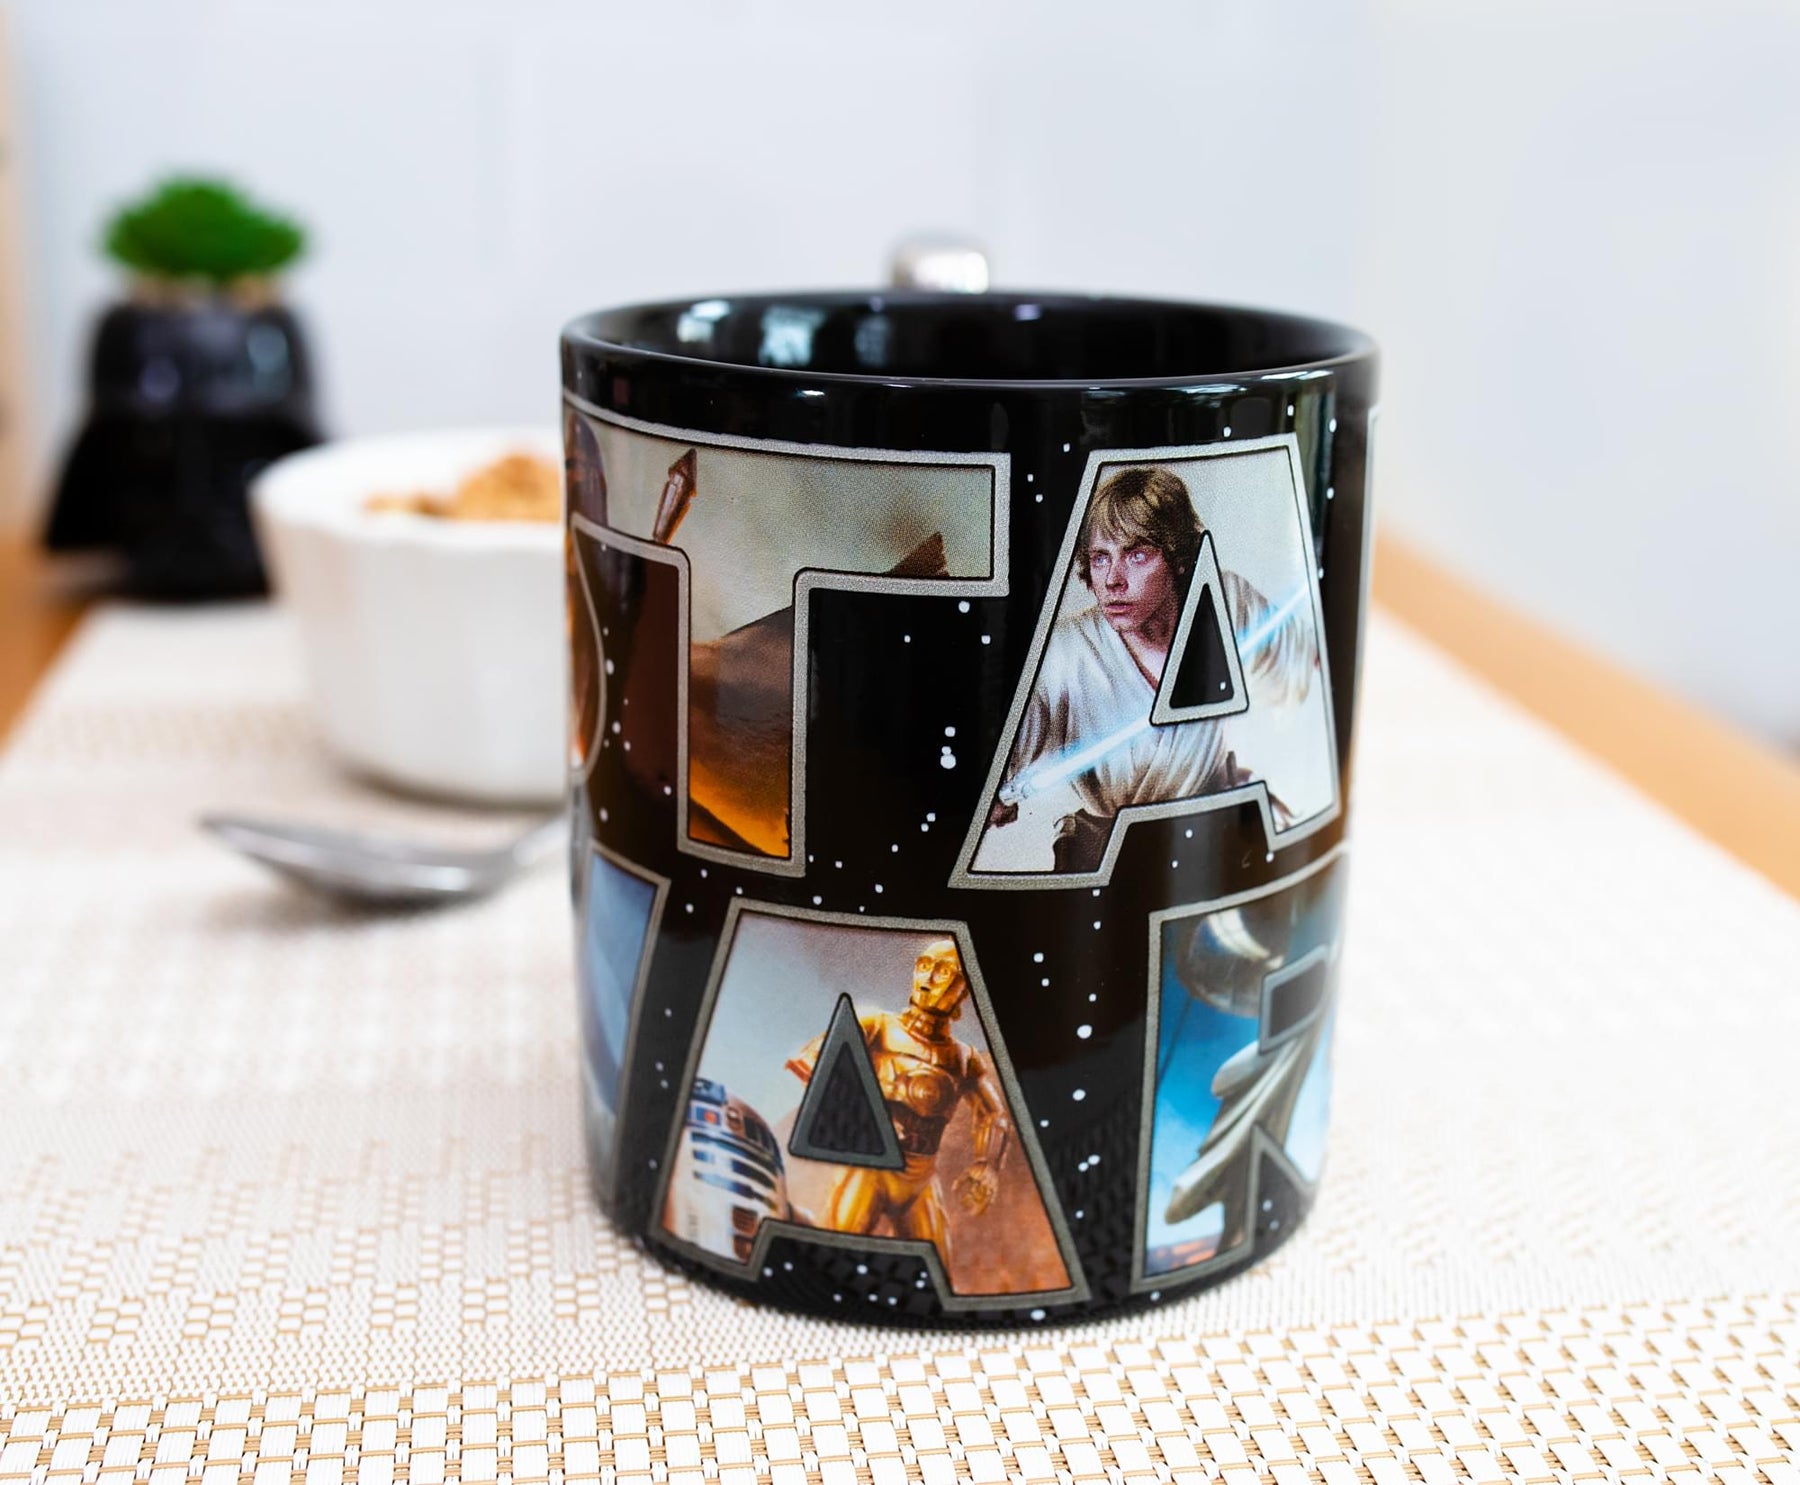 Star Wars Episode VII 20 Oz. Ceramic Mug